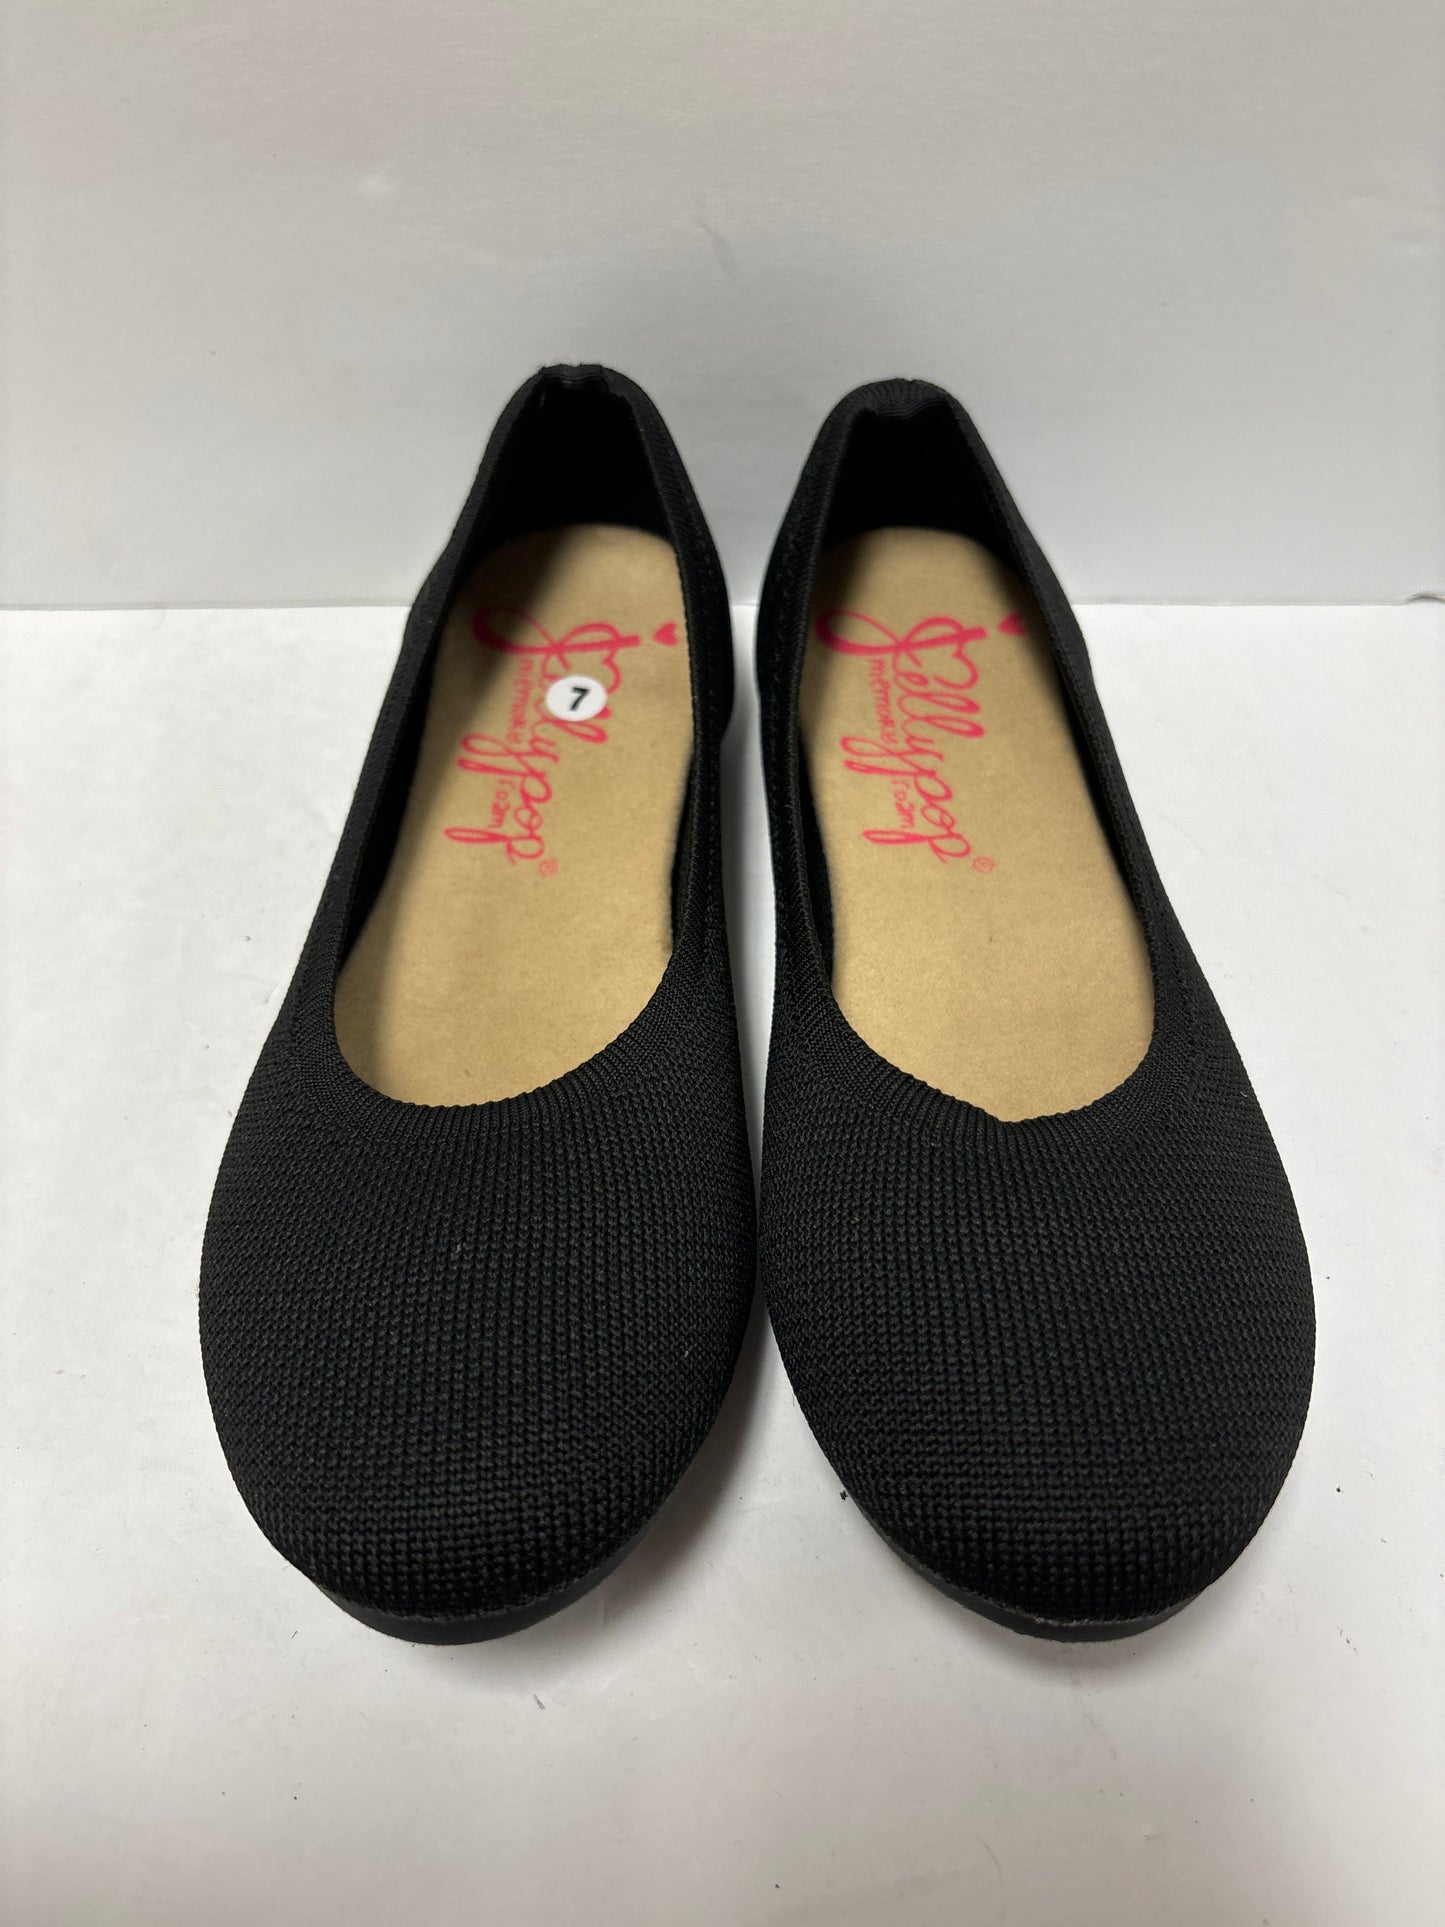 Black Shoes Flats Jelly Pop, Size 7